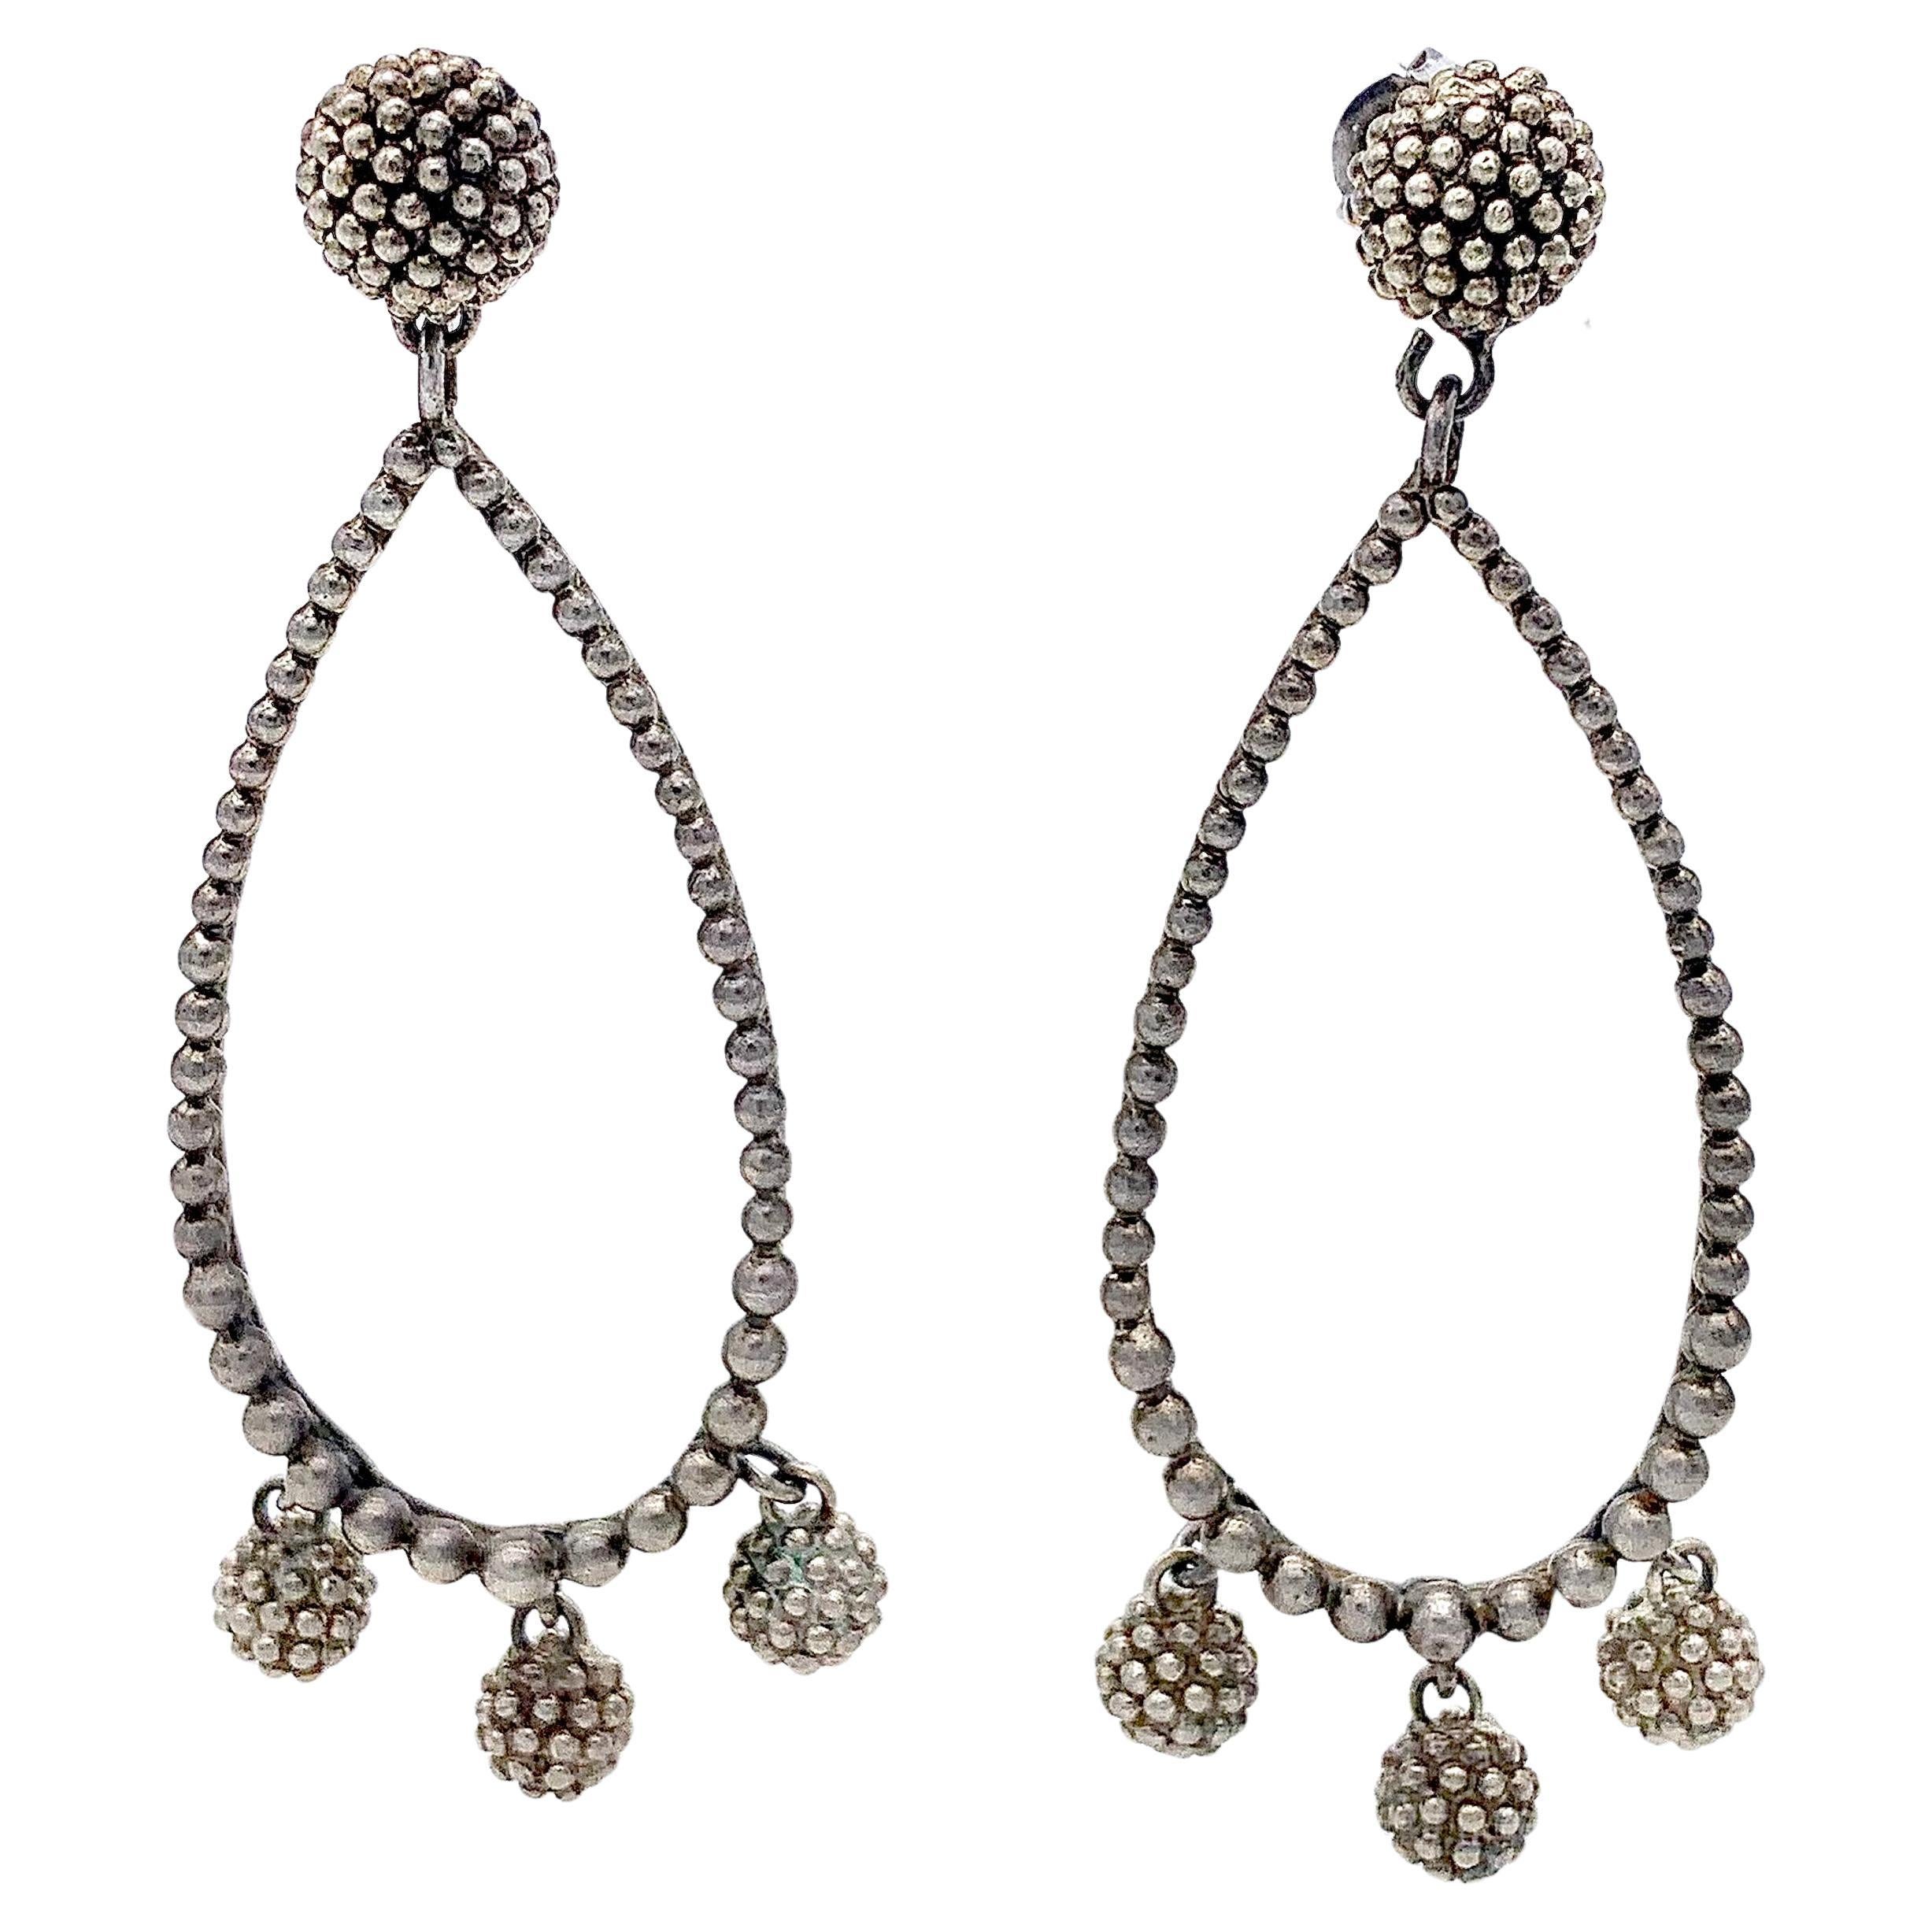 The Moderns Silver Dangling Earrings (boucles d'oreilles pendantes)